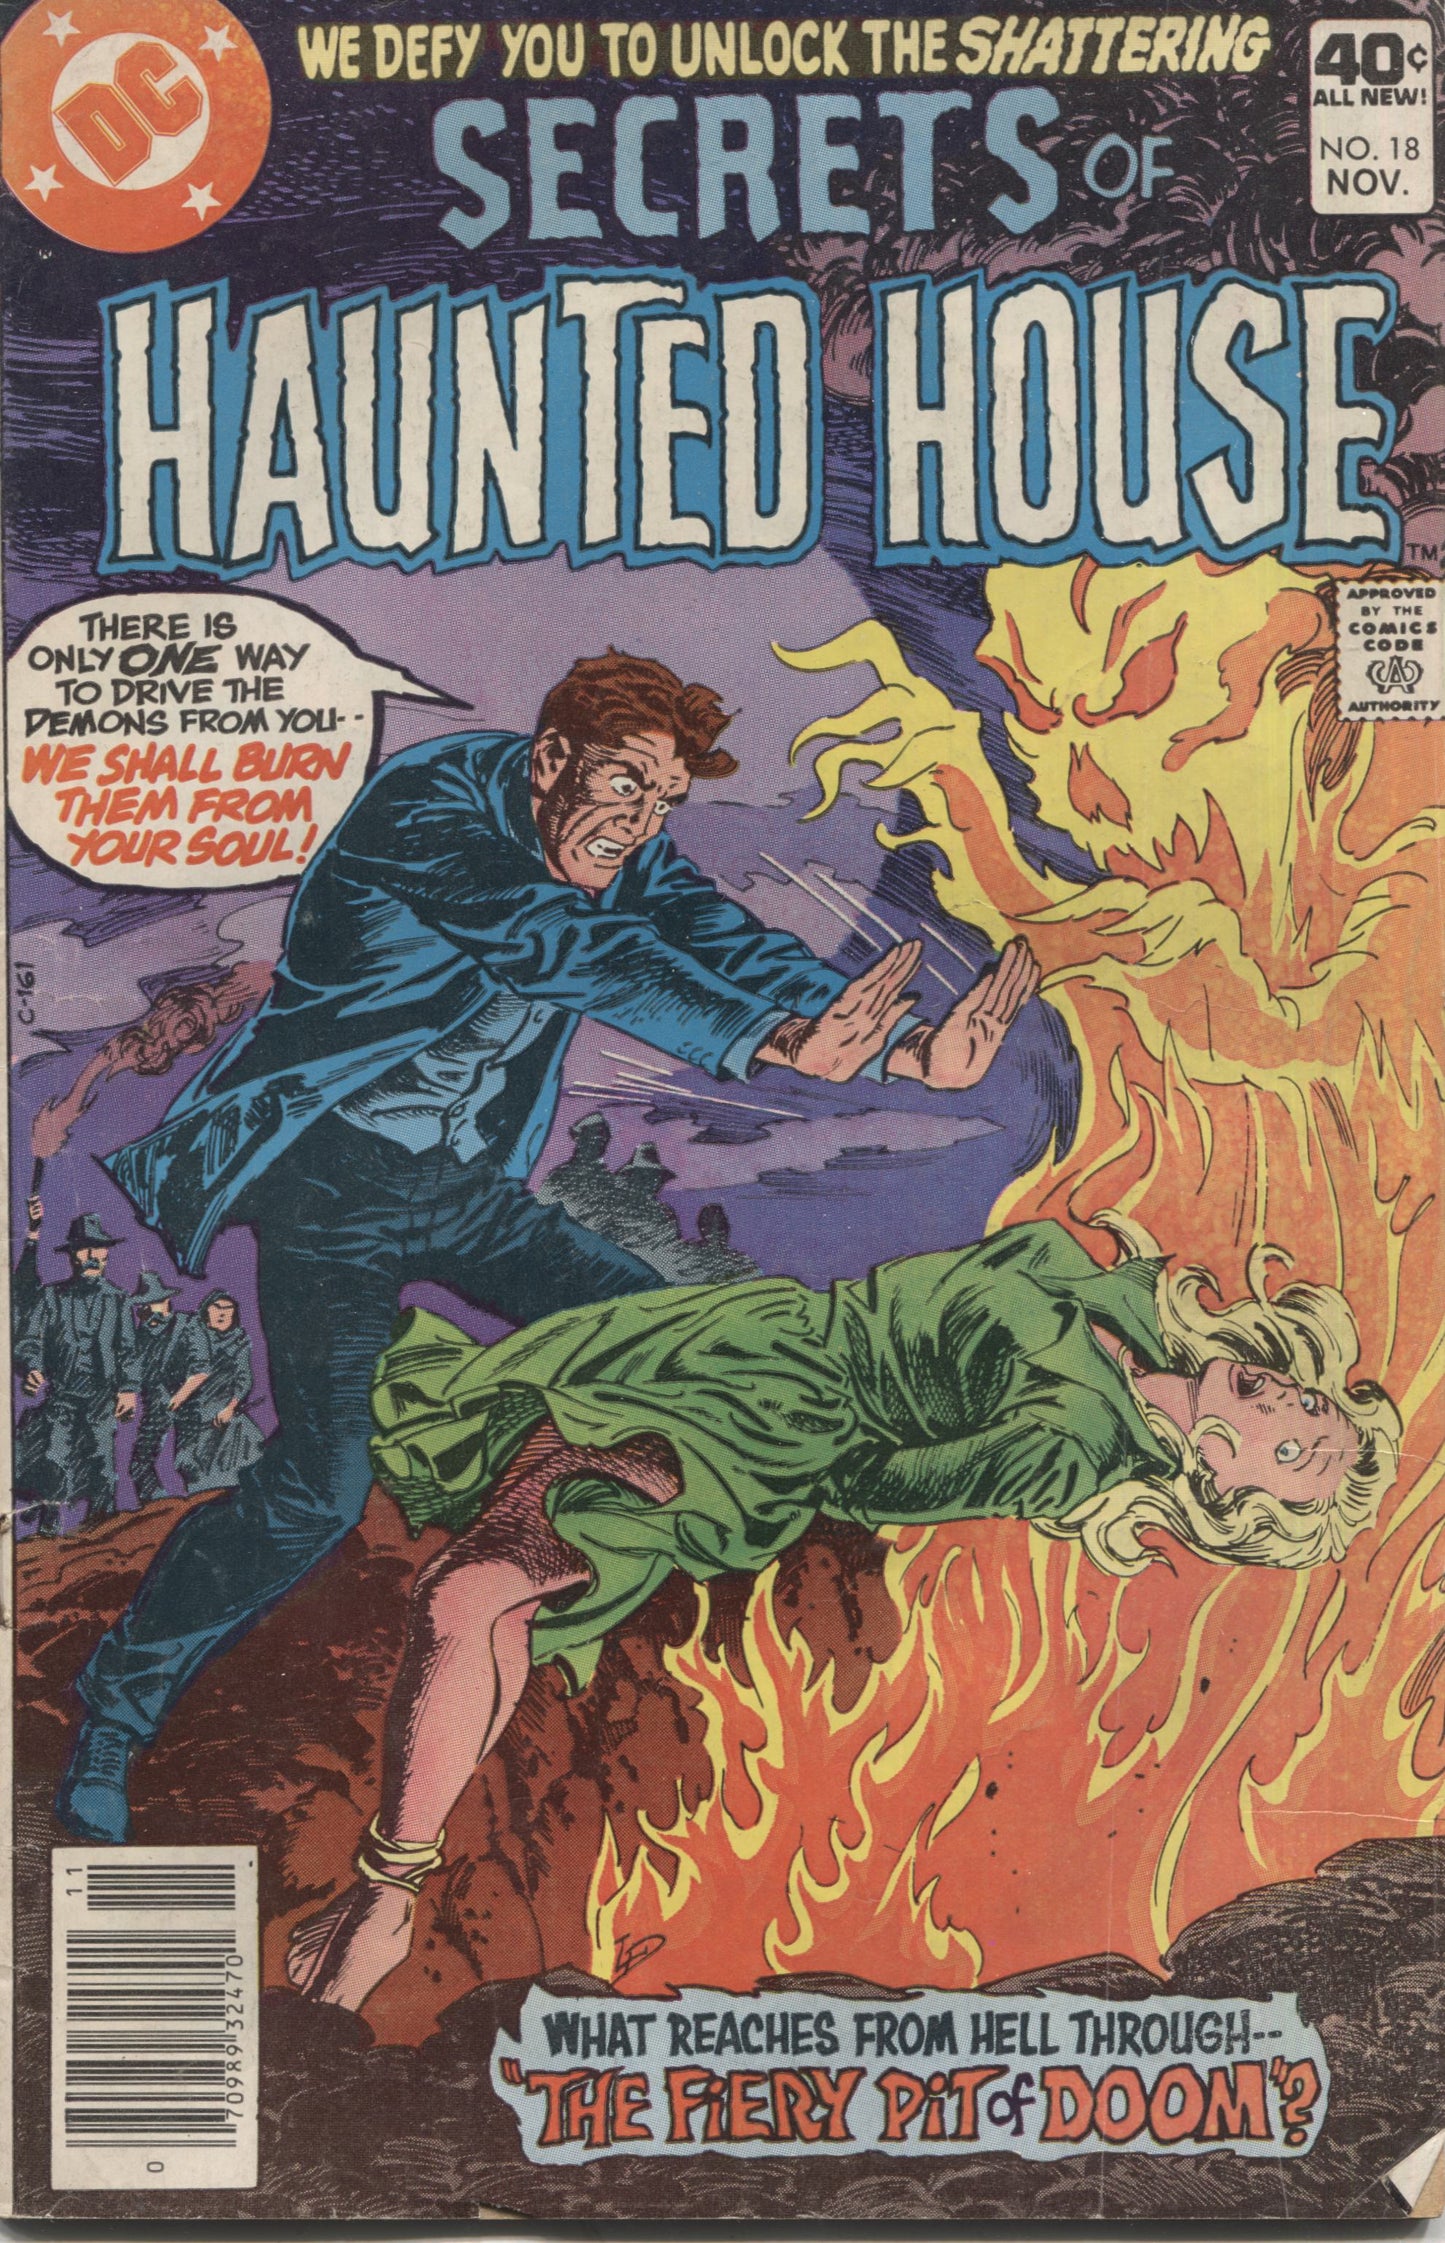 Secrets of Haunted House No. 18, "The Fiery Pit of Doom," DC Comics, November 1979